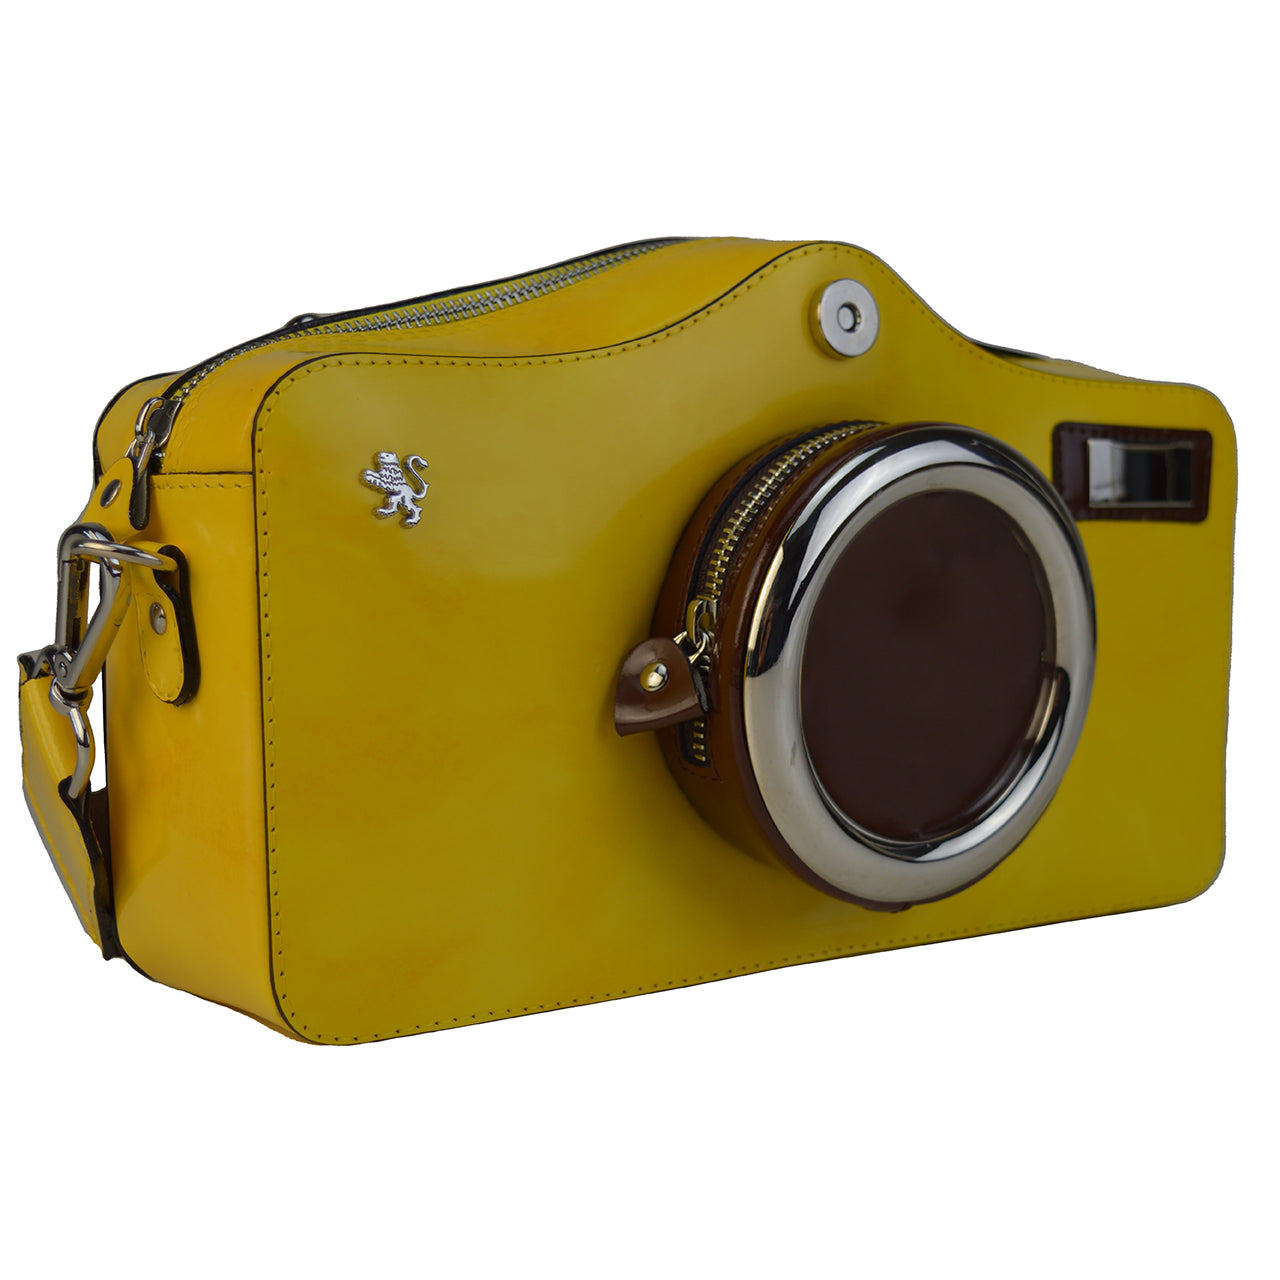 Pratesi Photocamera Radica Shoulder Bag in genuine Italian leather - Photocamera R444 White